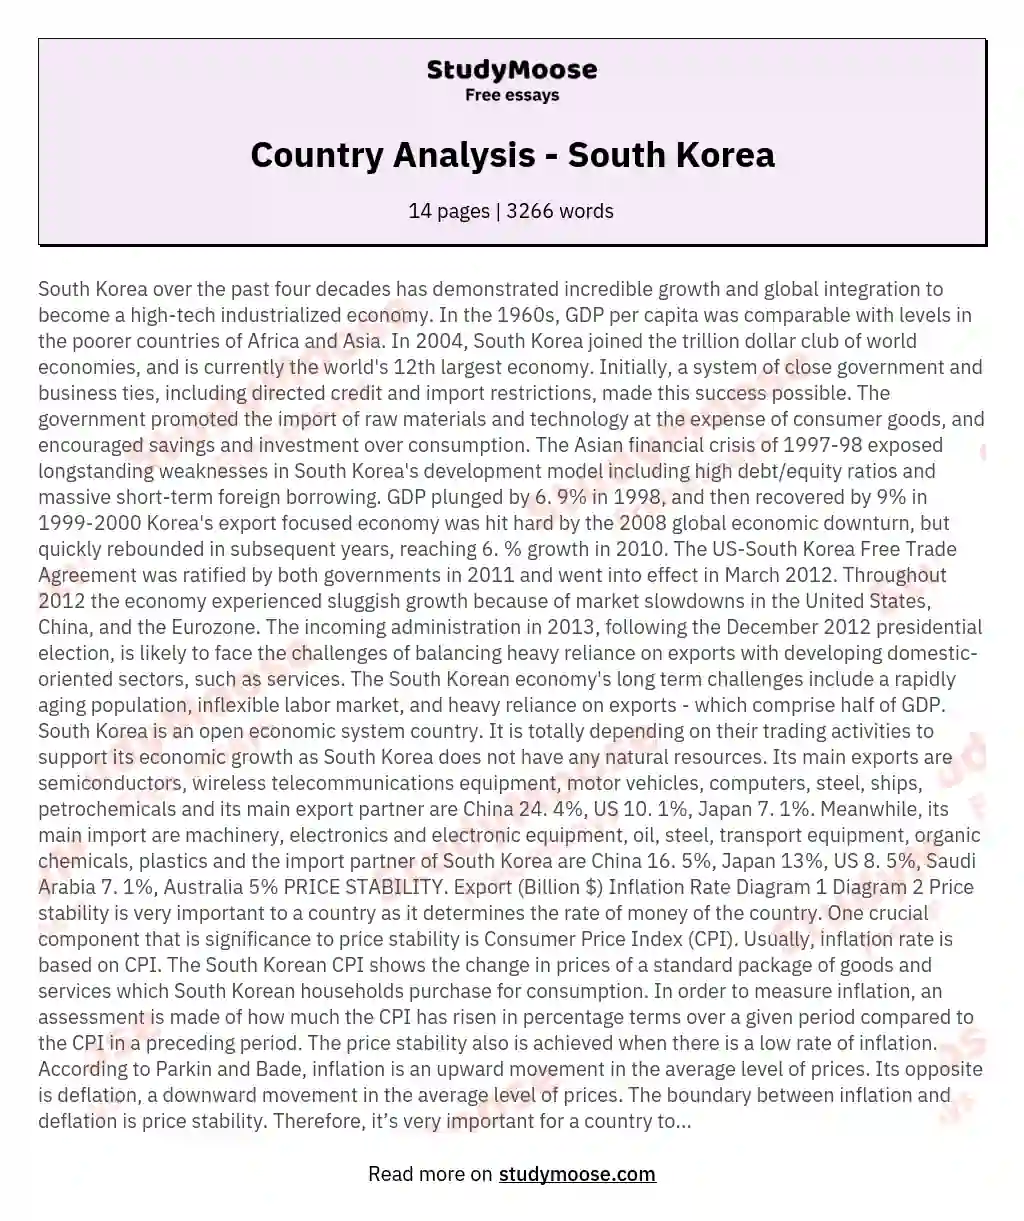 Country Analysis - South Korea